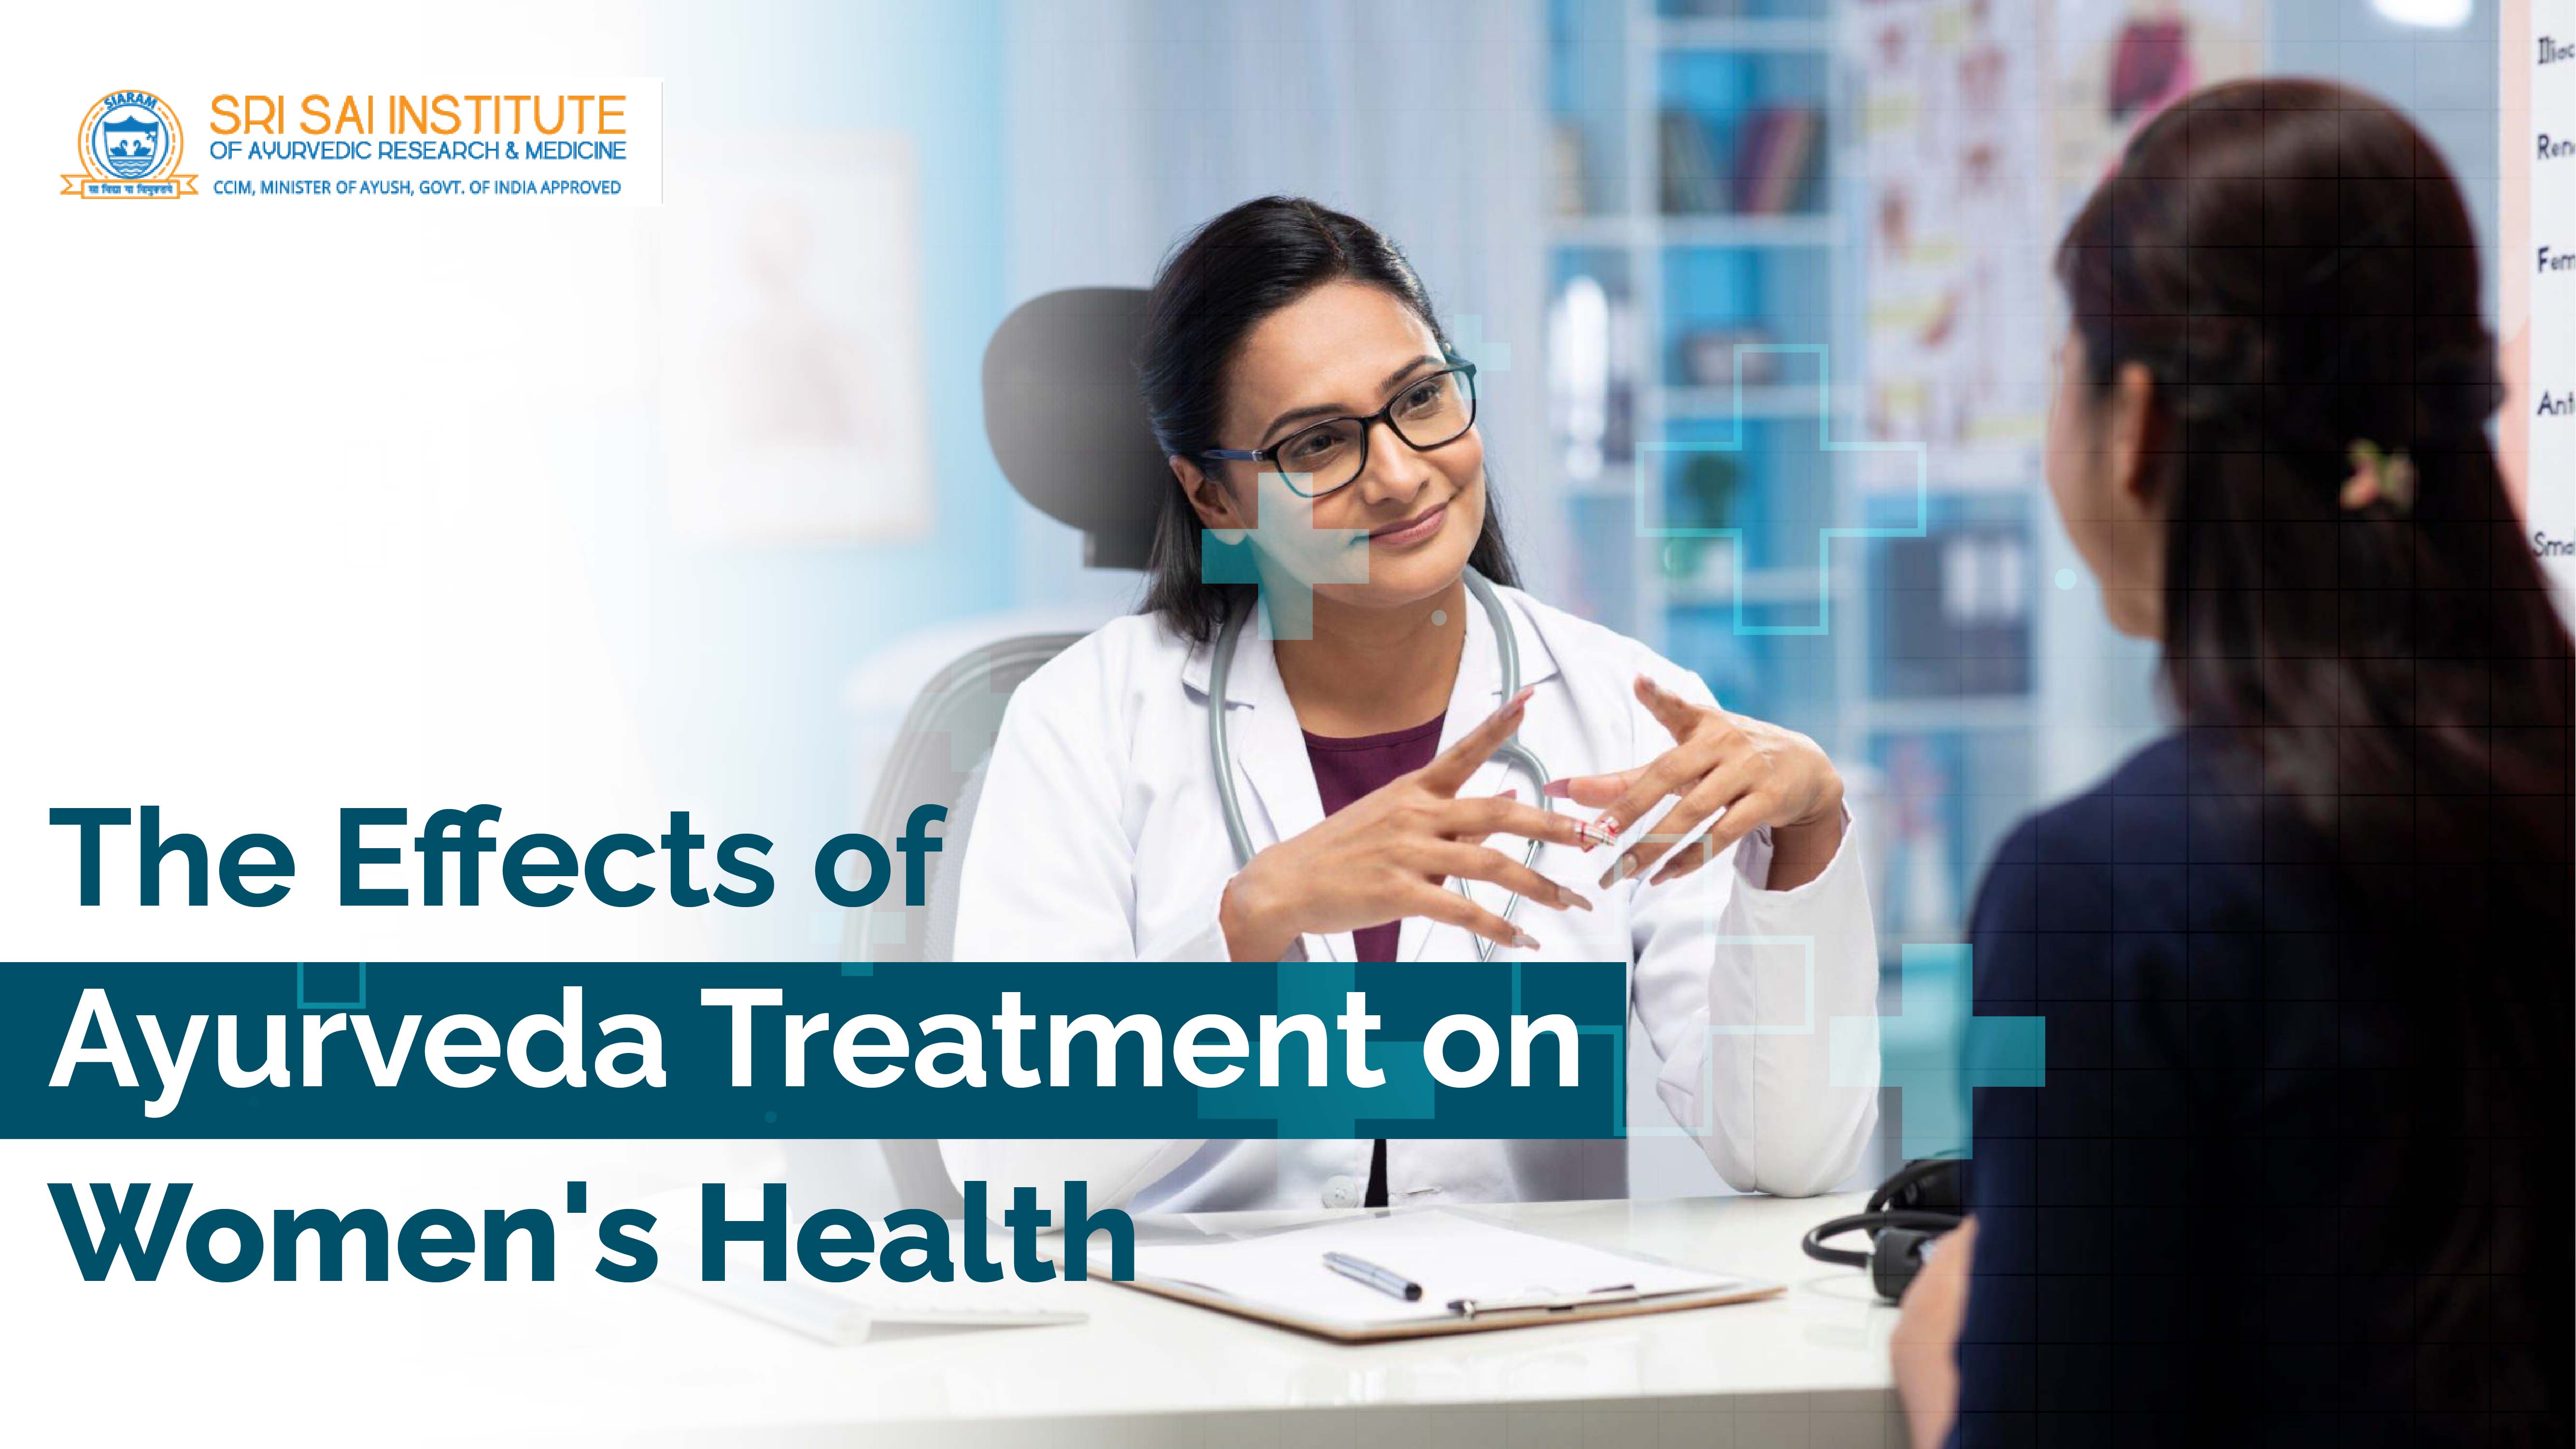 Ayurveda Treatment on Women's Health